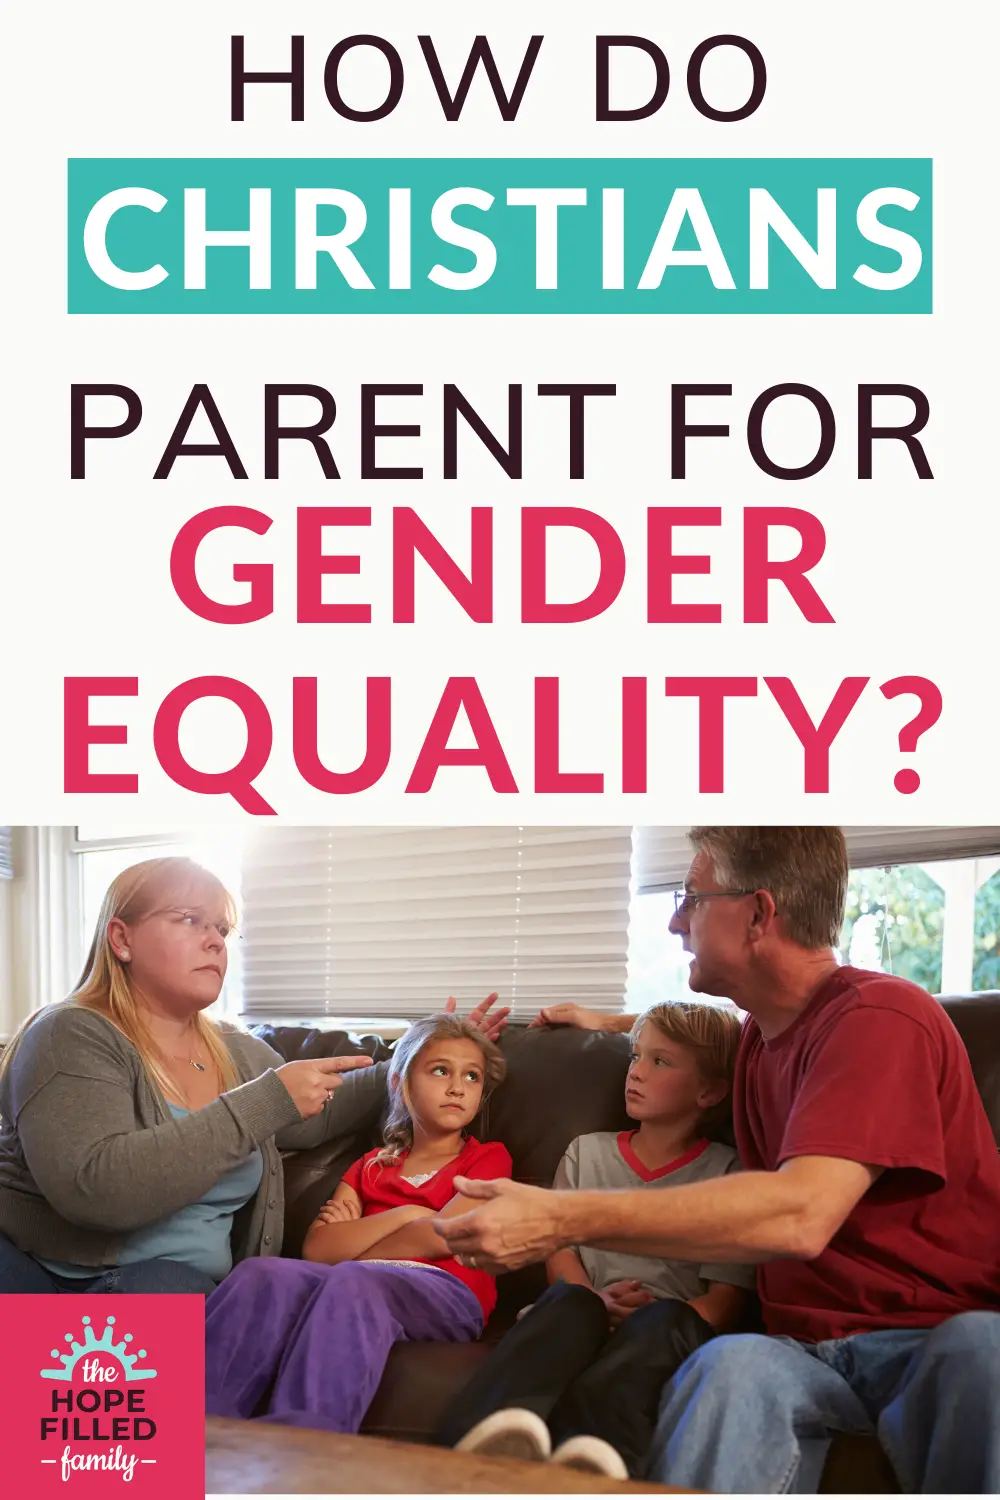 How do Christians parent for gender equality?